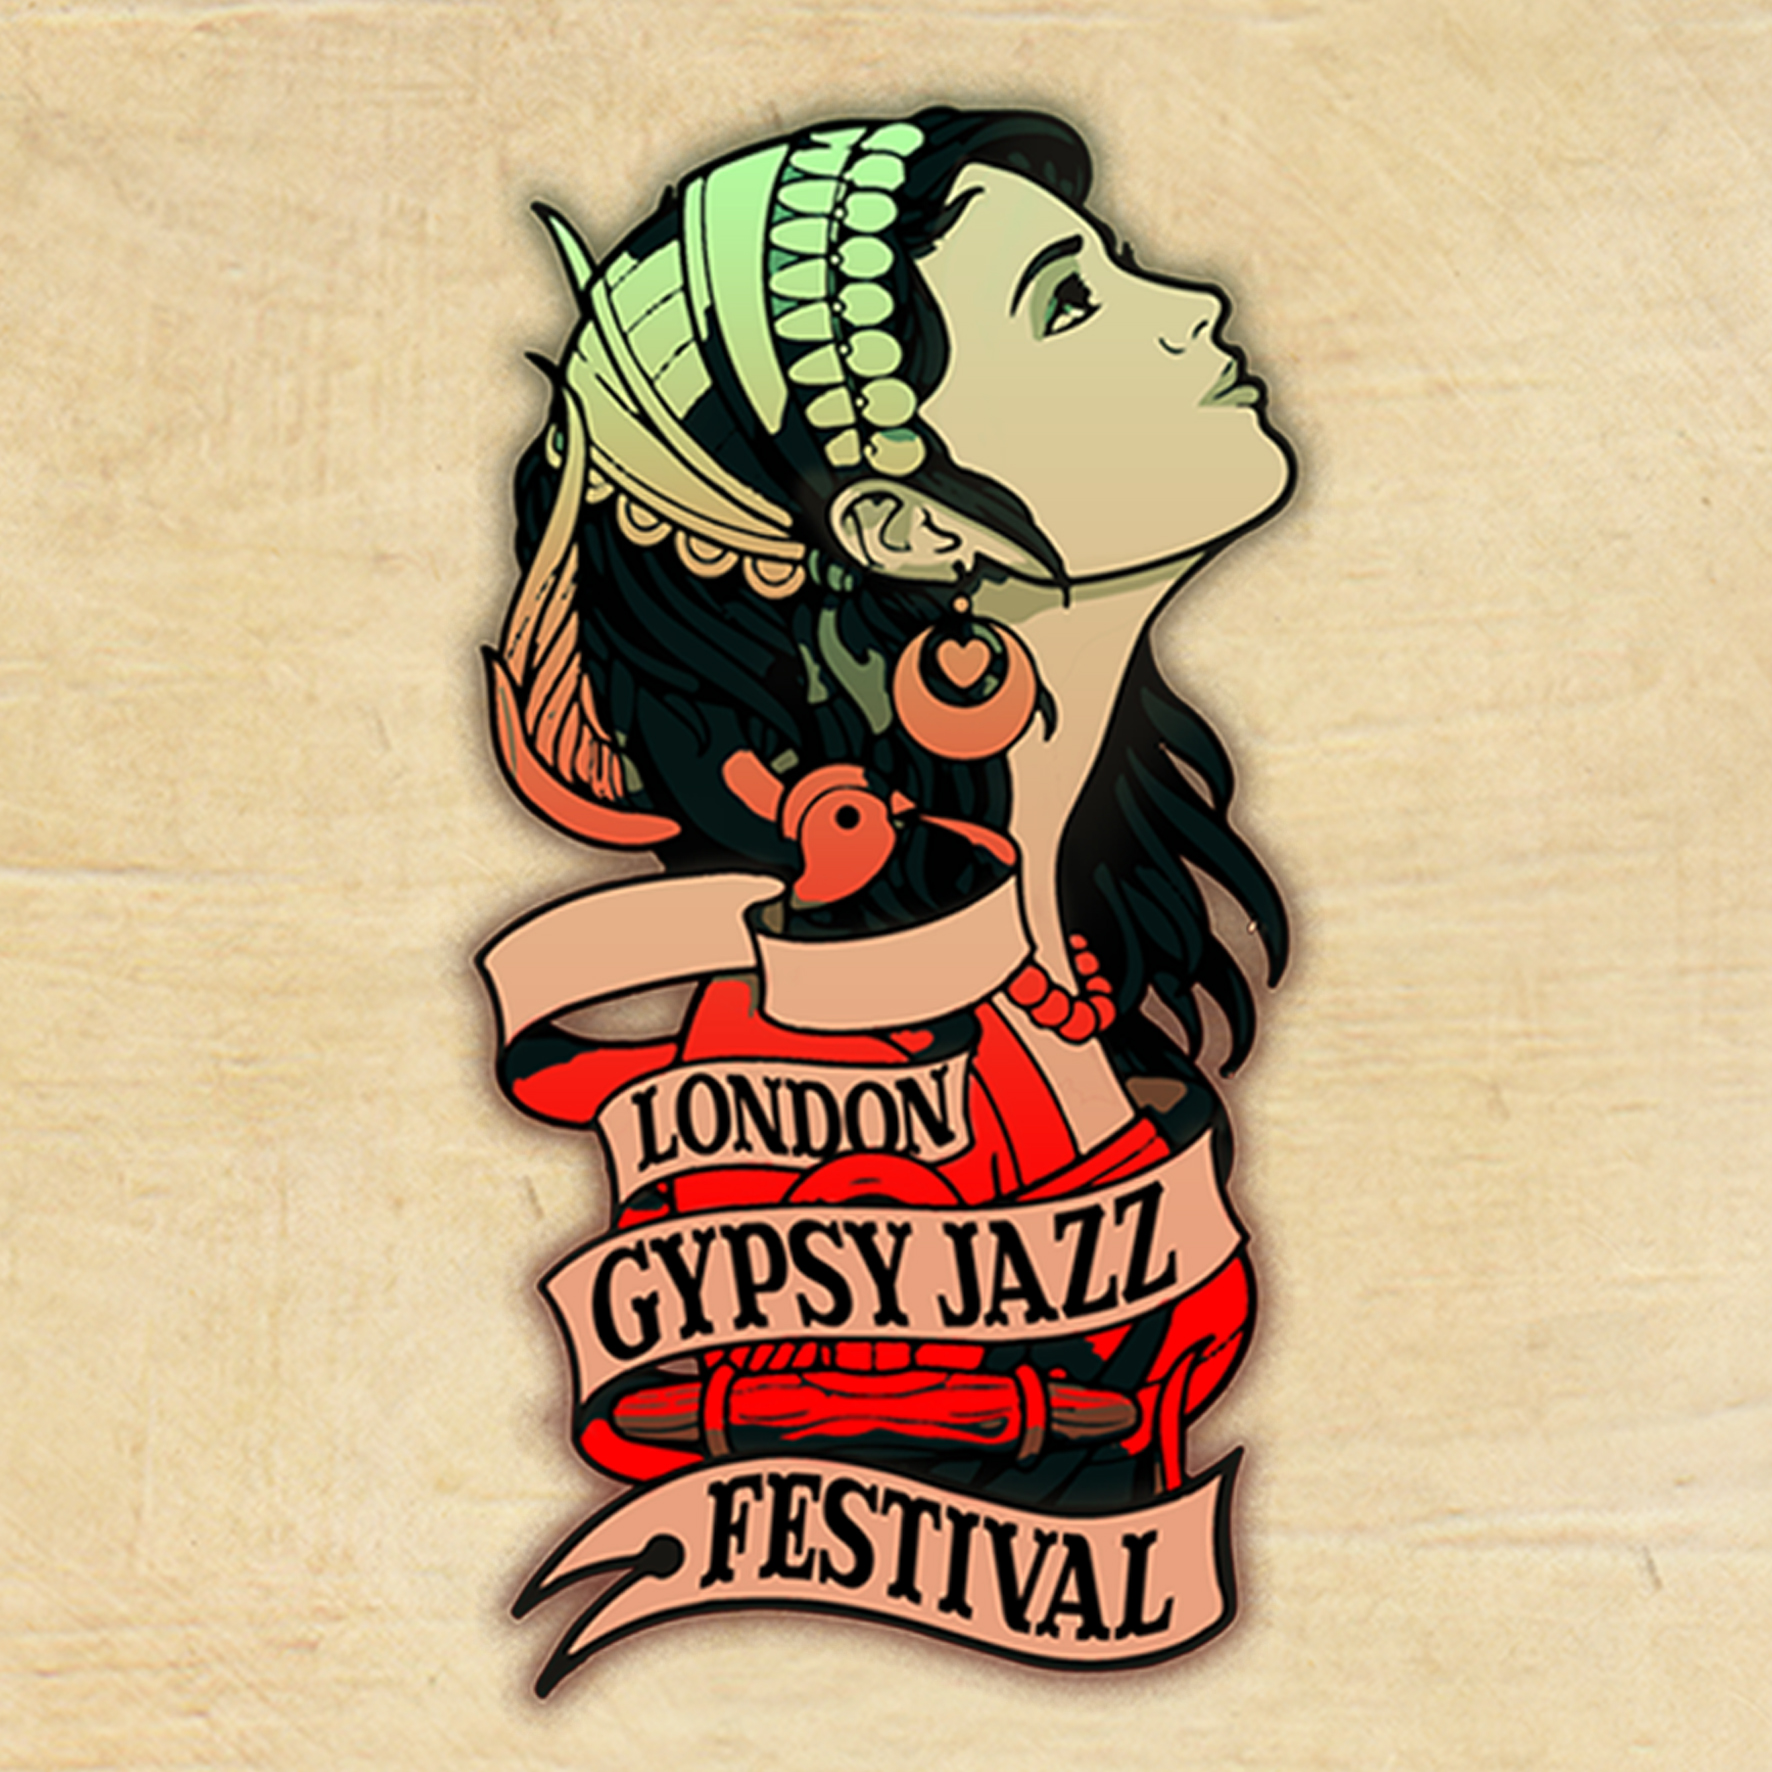 Announcing The London Gypsy Jazz Festival Werkre